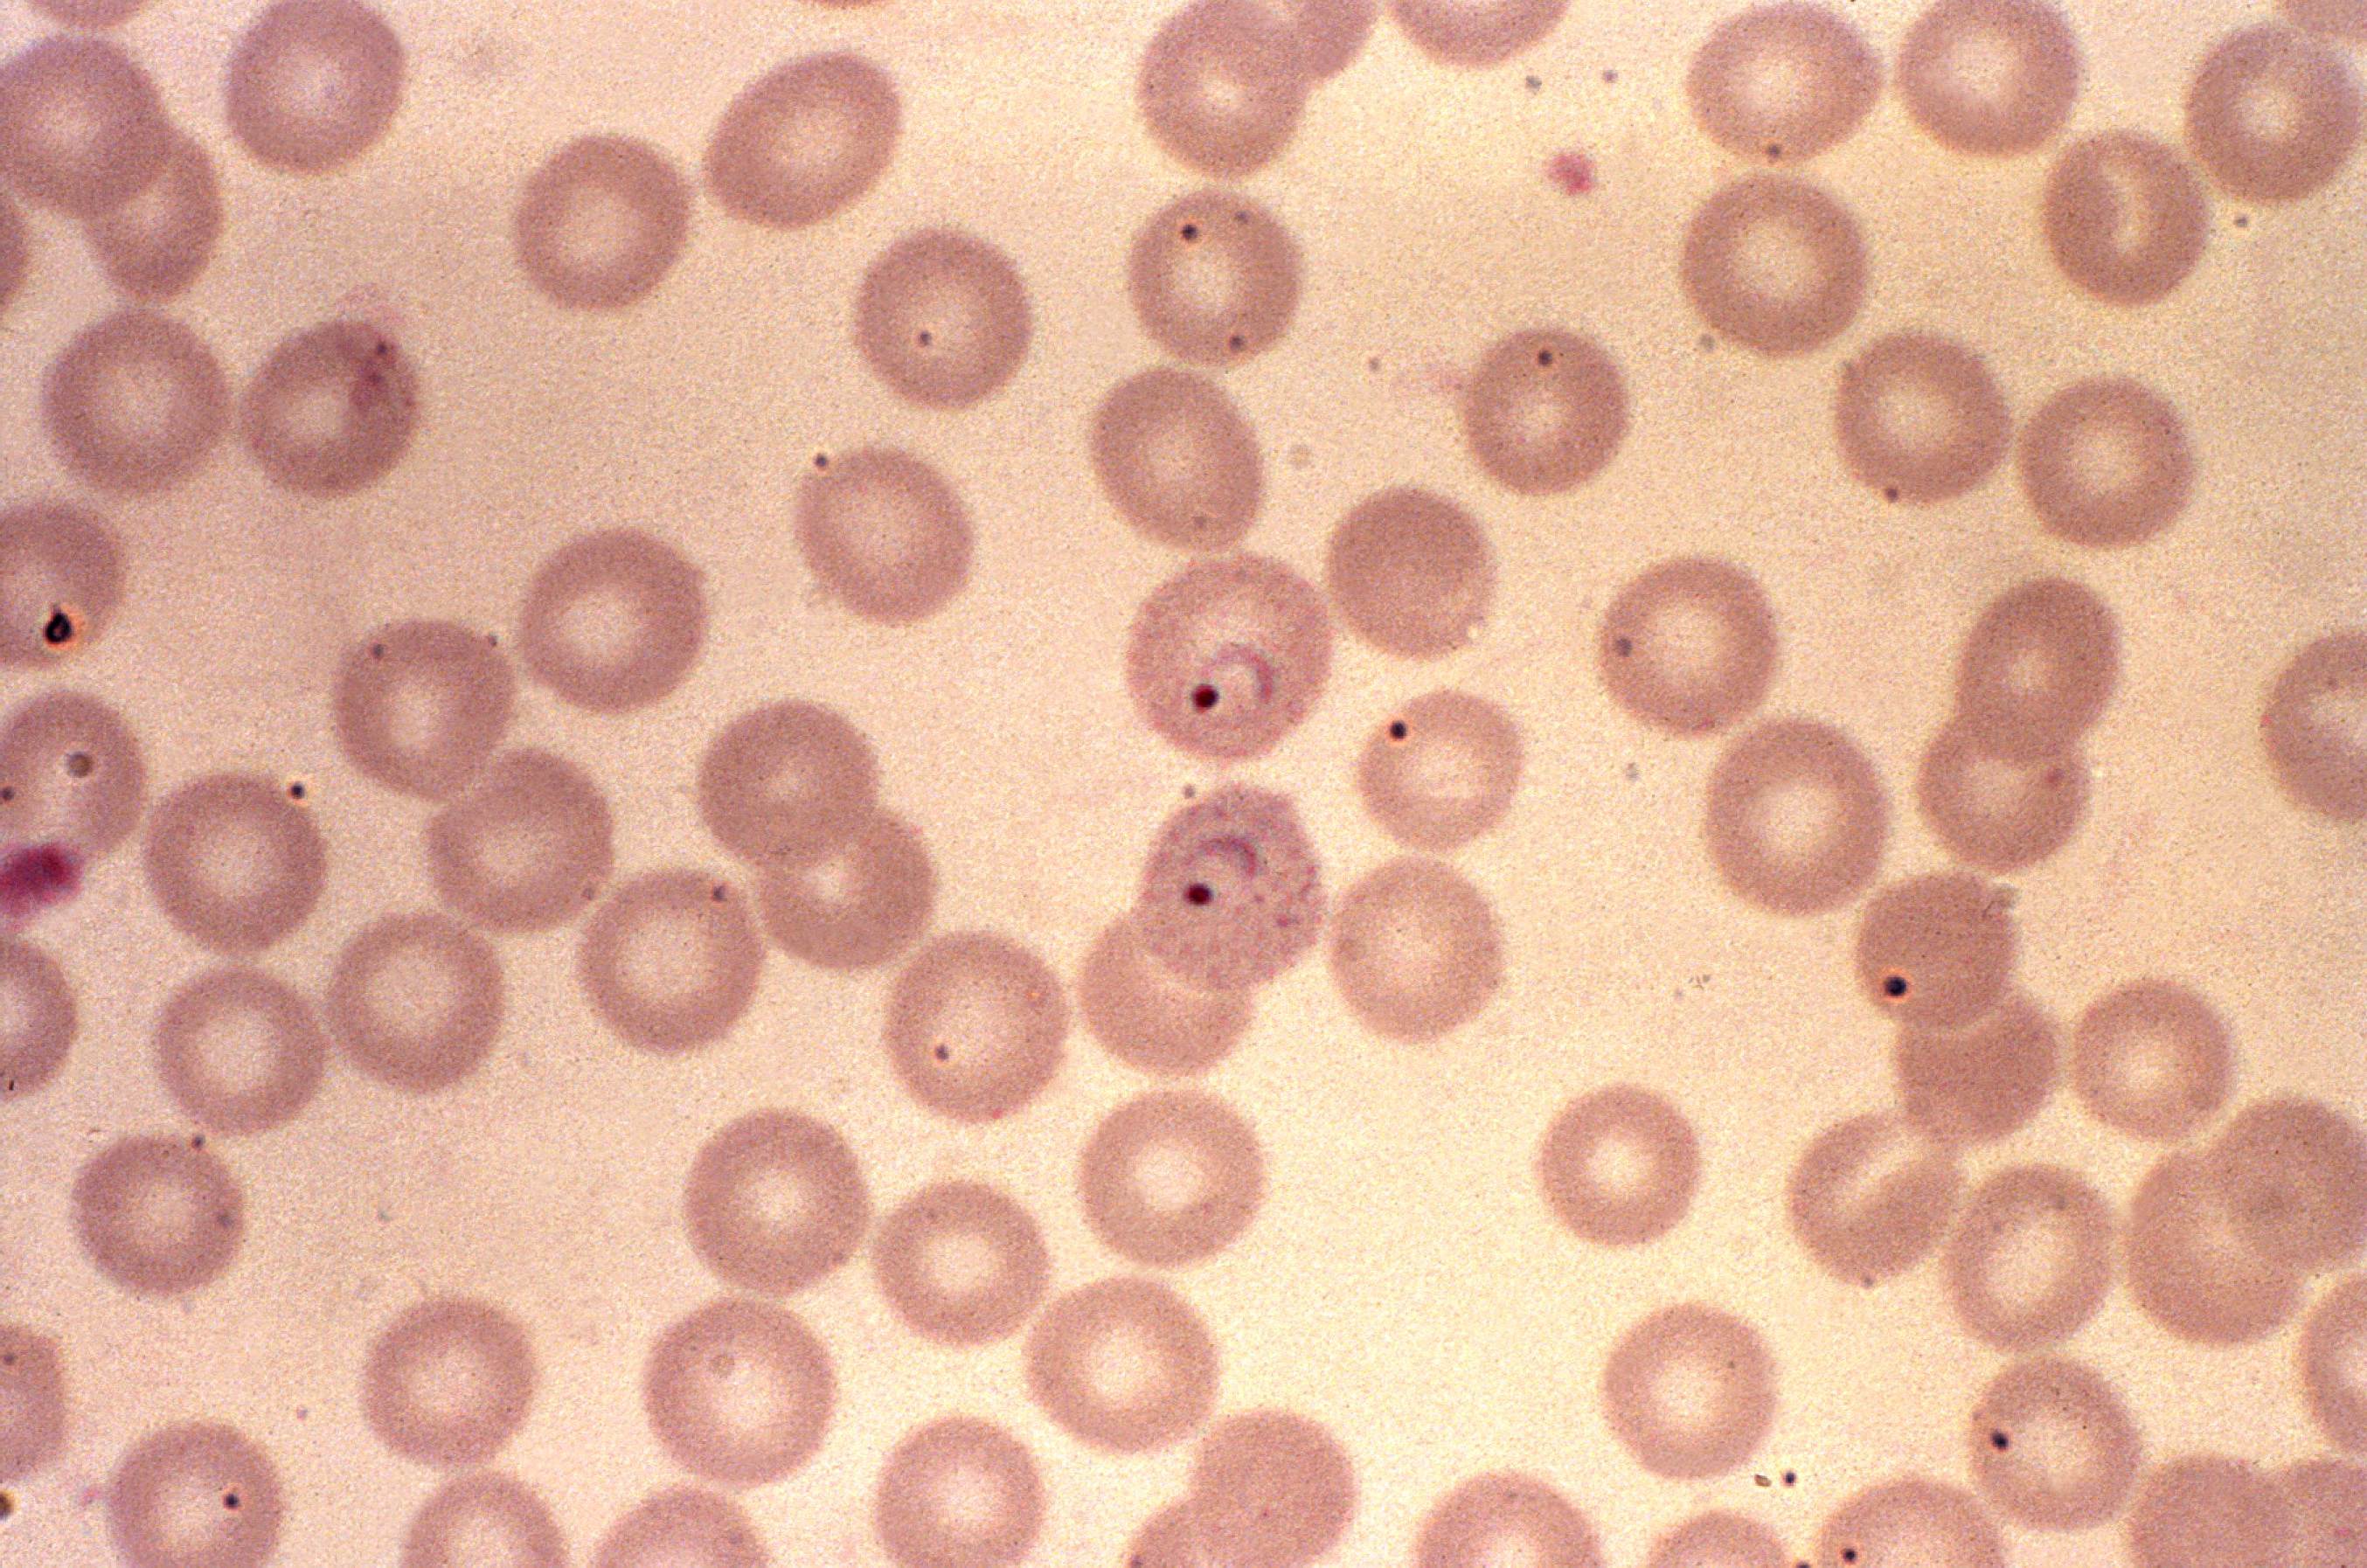 Малярийный плазмодий клетка. Малярийный плазмодий Вивакс. Плазмодий Вивакс у человека. Плазмодий Вивакс под микроскопом. Малярийный плазмодий под микроскопом.